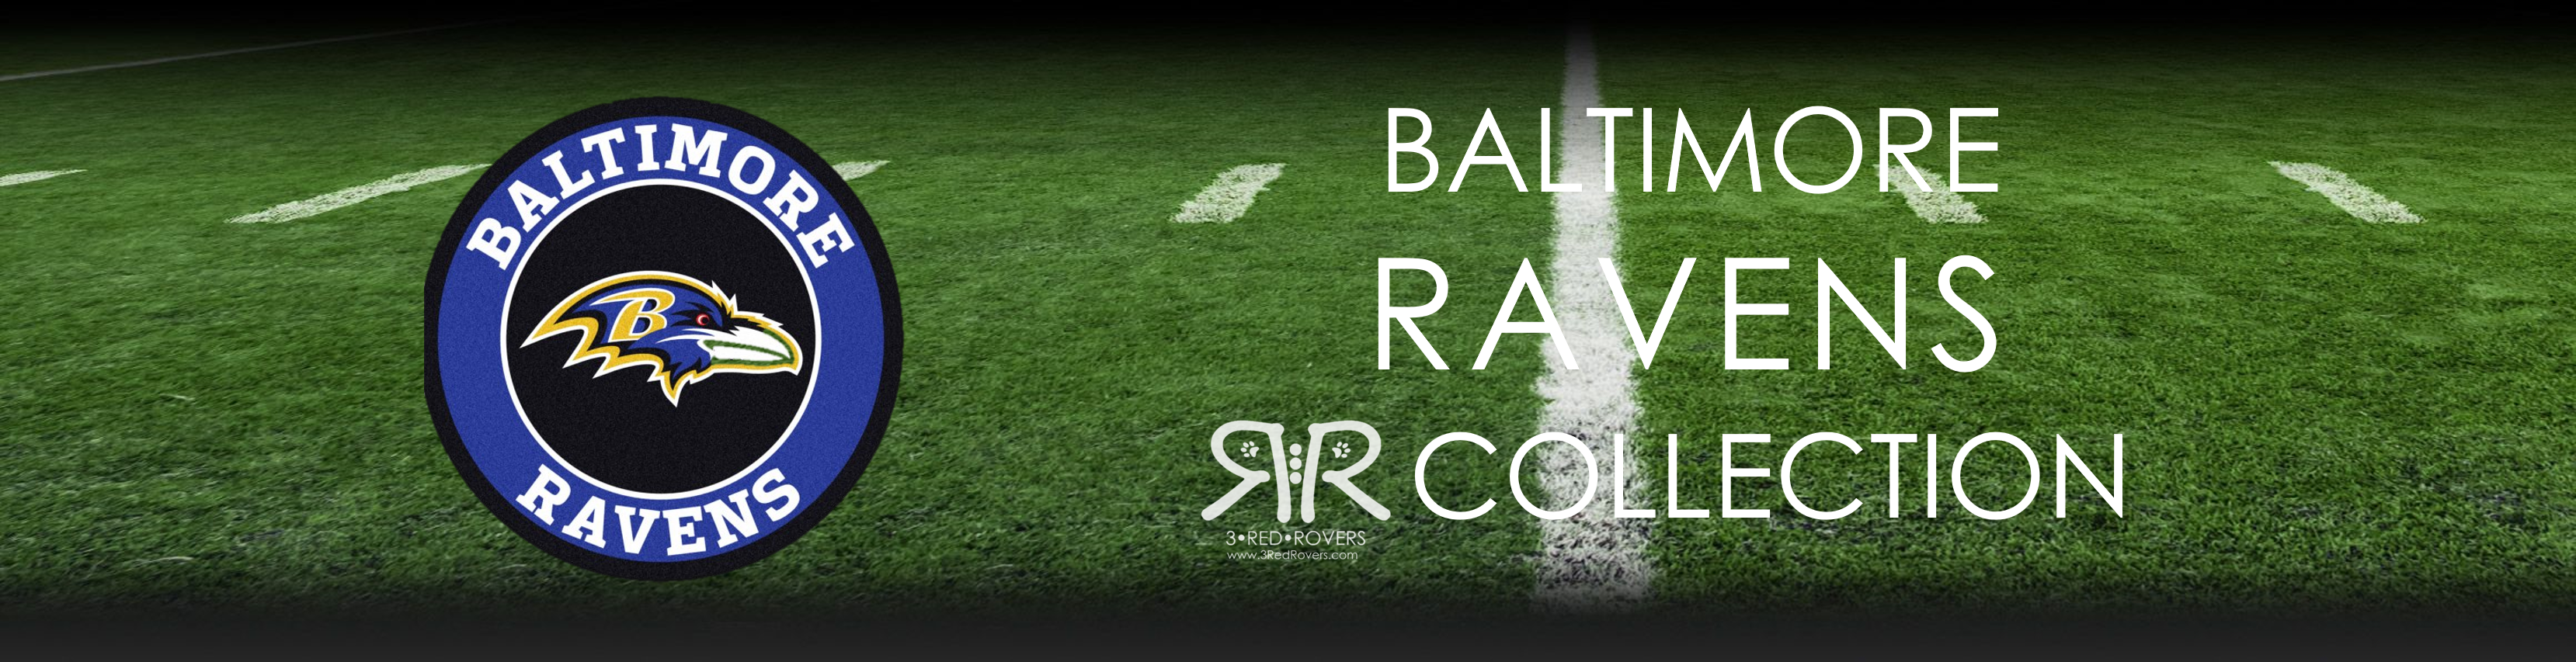 nfl baltimore ravens dog pet jersey 3redrovers.com